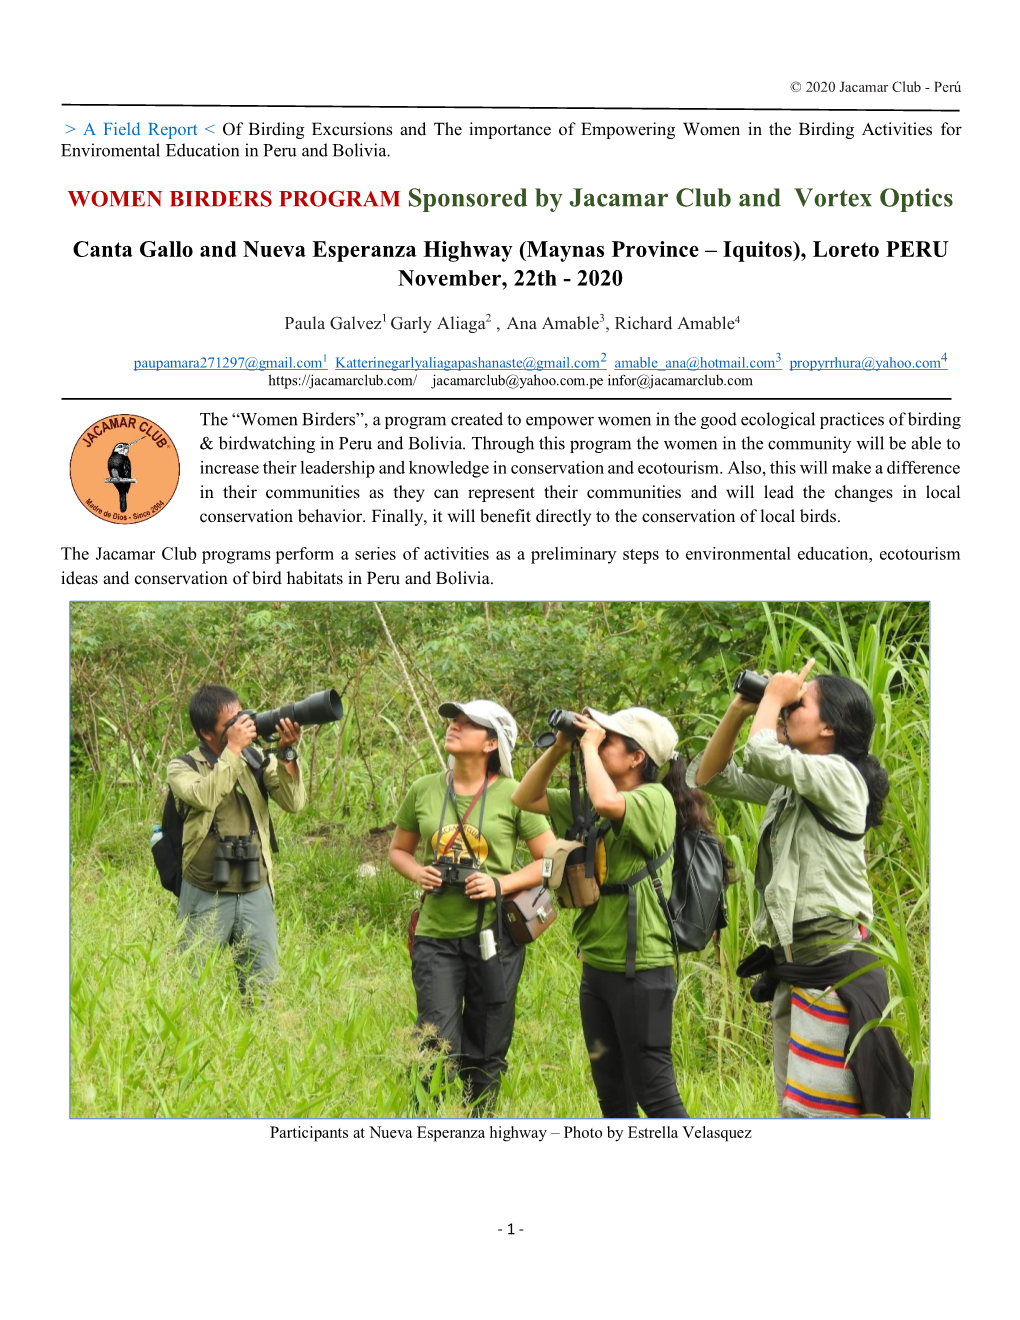 WOMEN BIRDERS PROGRAM Sponsored by Jacamar Club and Vortex Optics